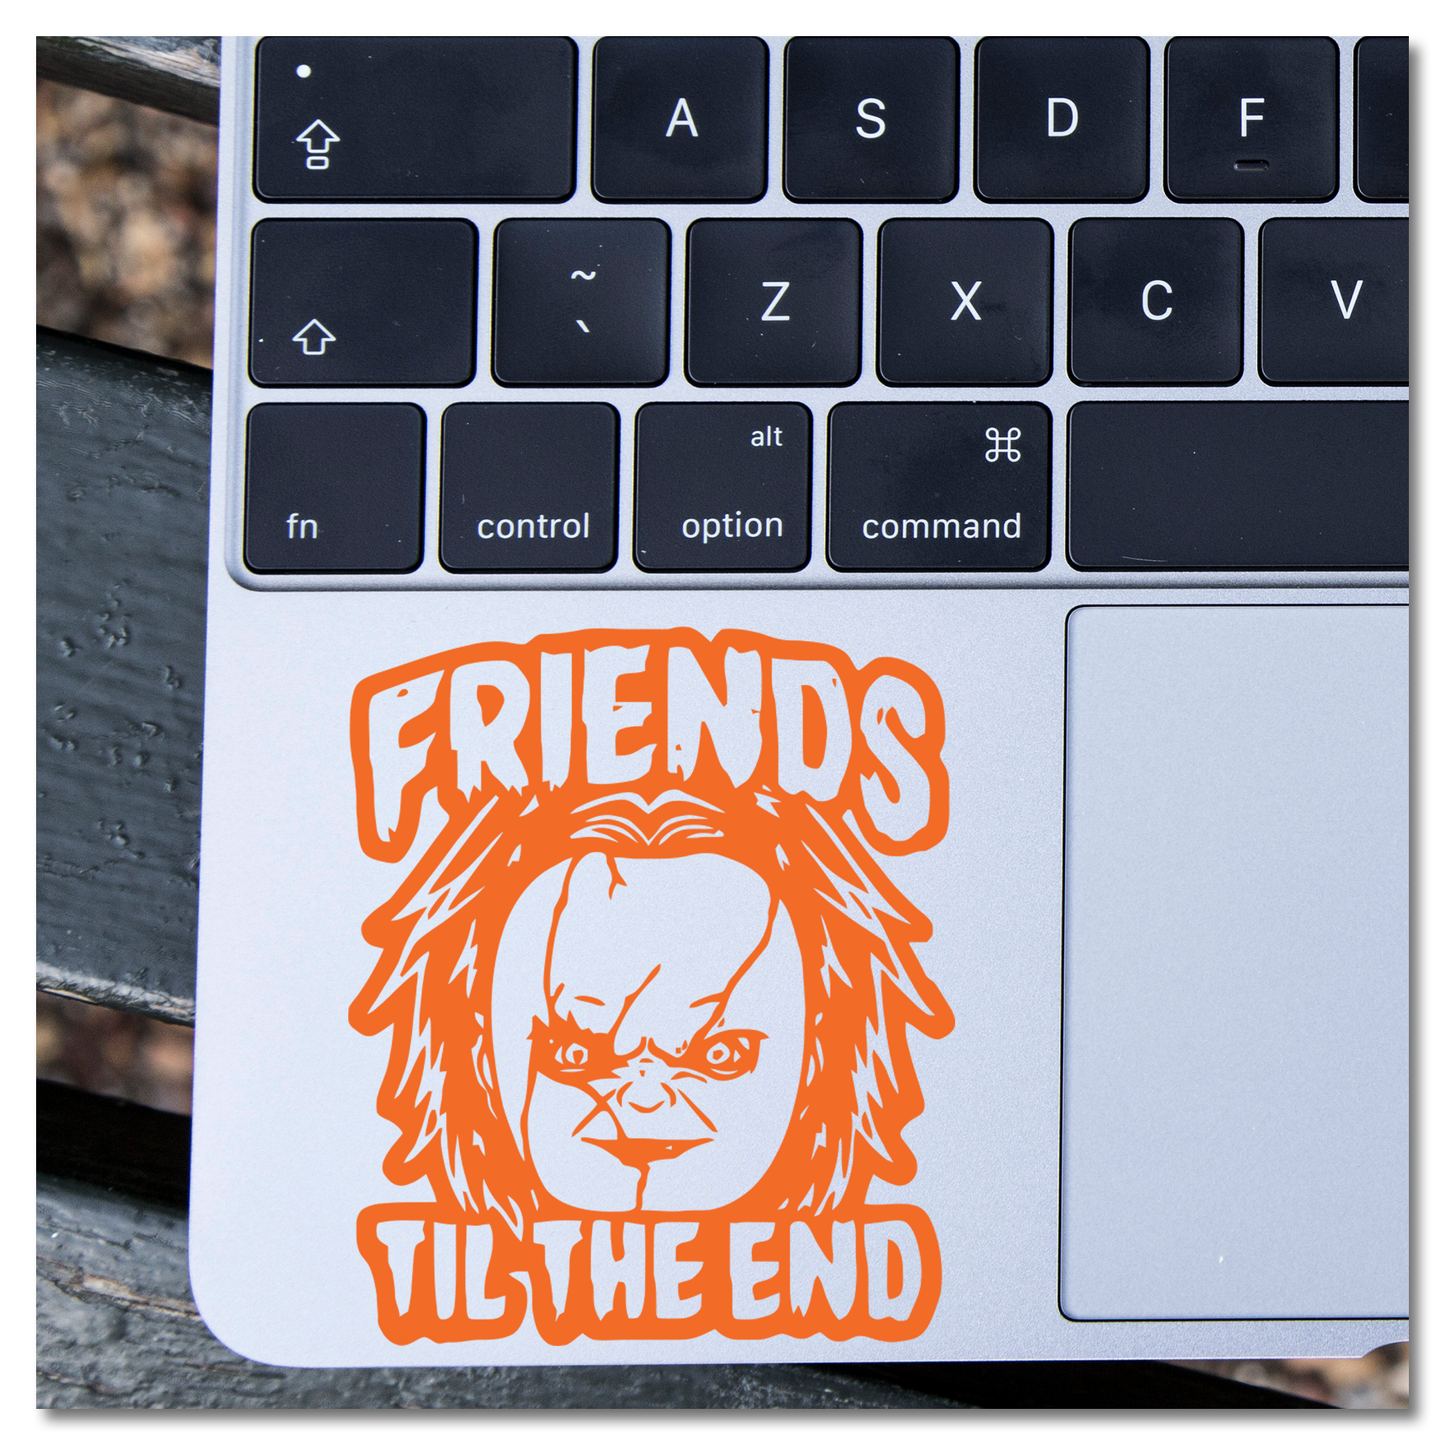 Chucky Friends Till The End Child's Play Vinyl Decal Sticker